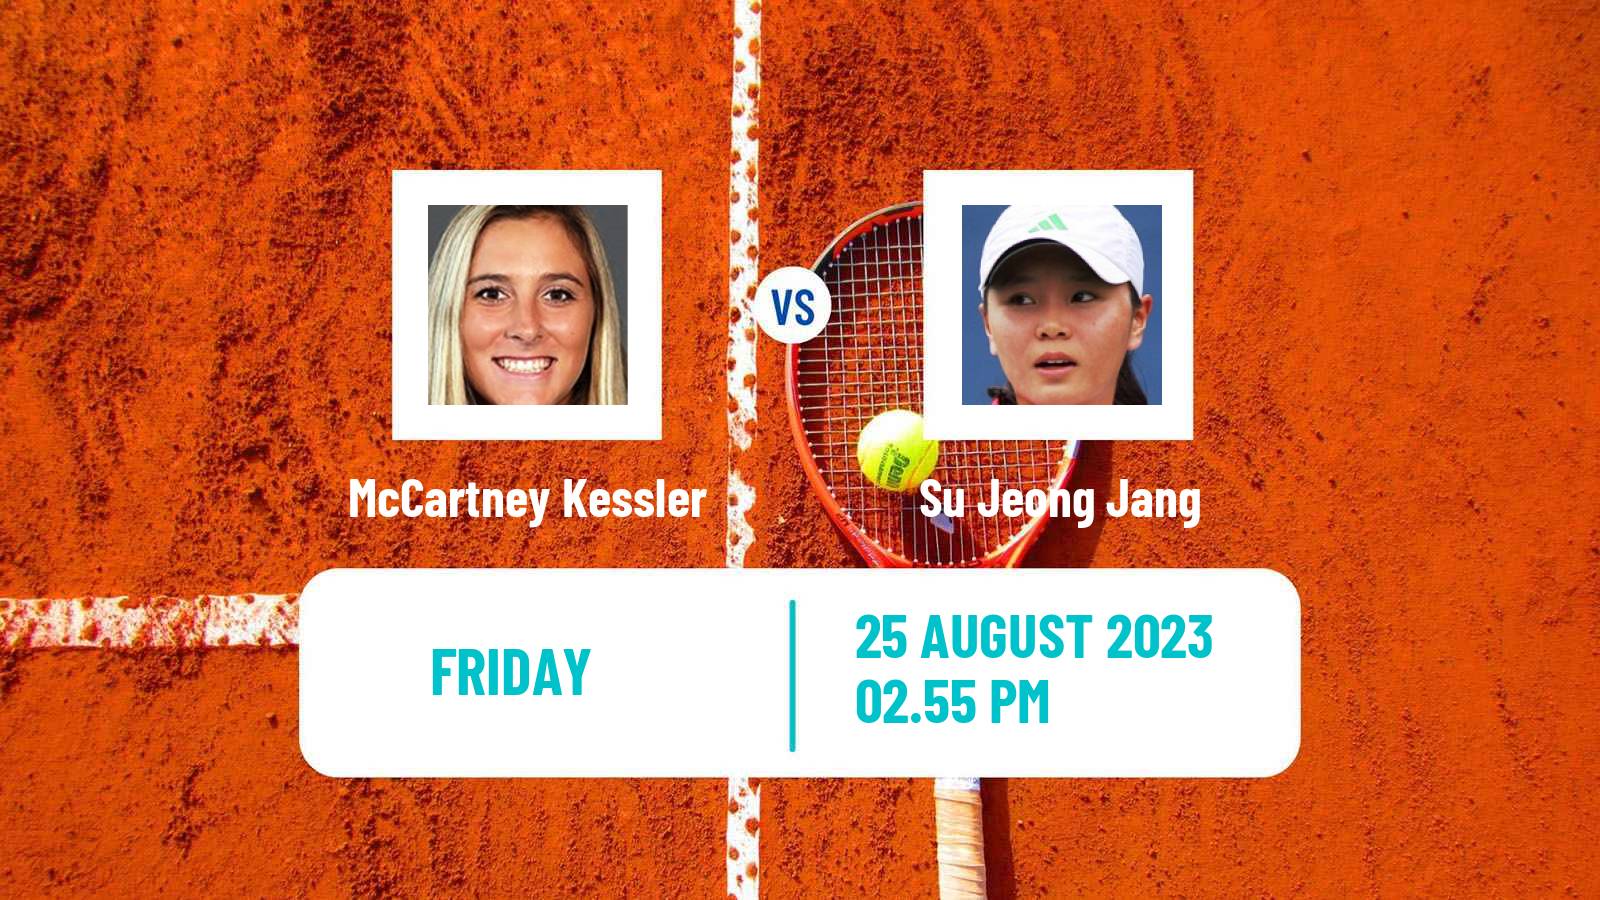 Tennis WTA US Open McCartney Kessler - Su Jeong Jang